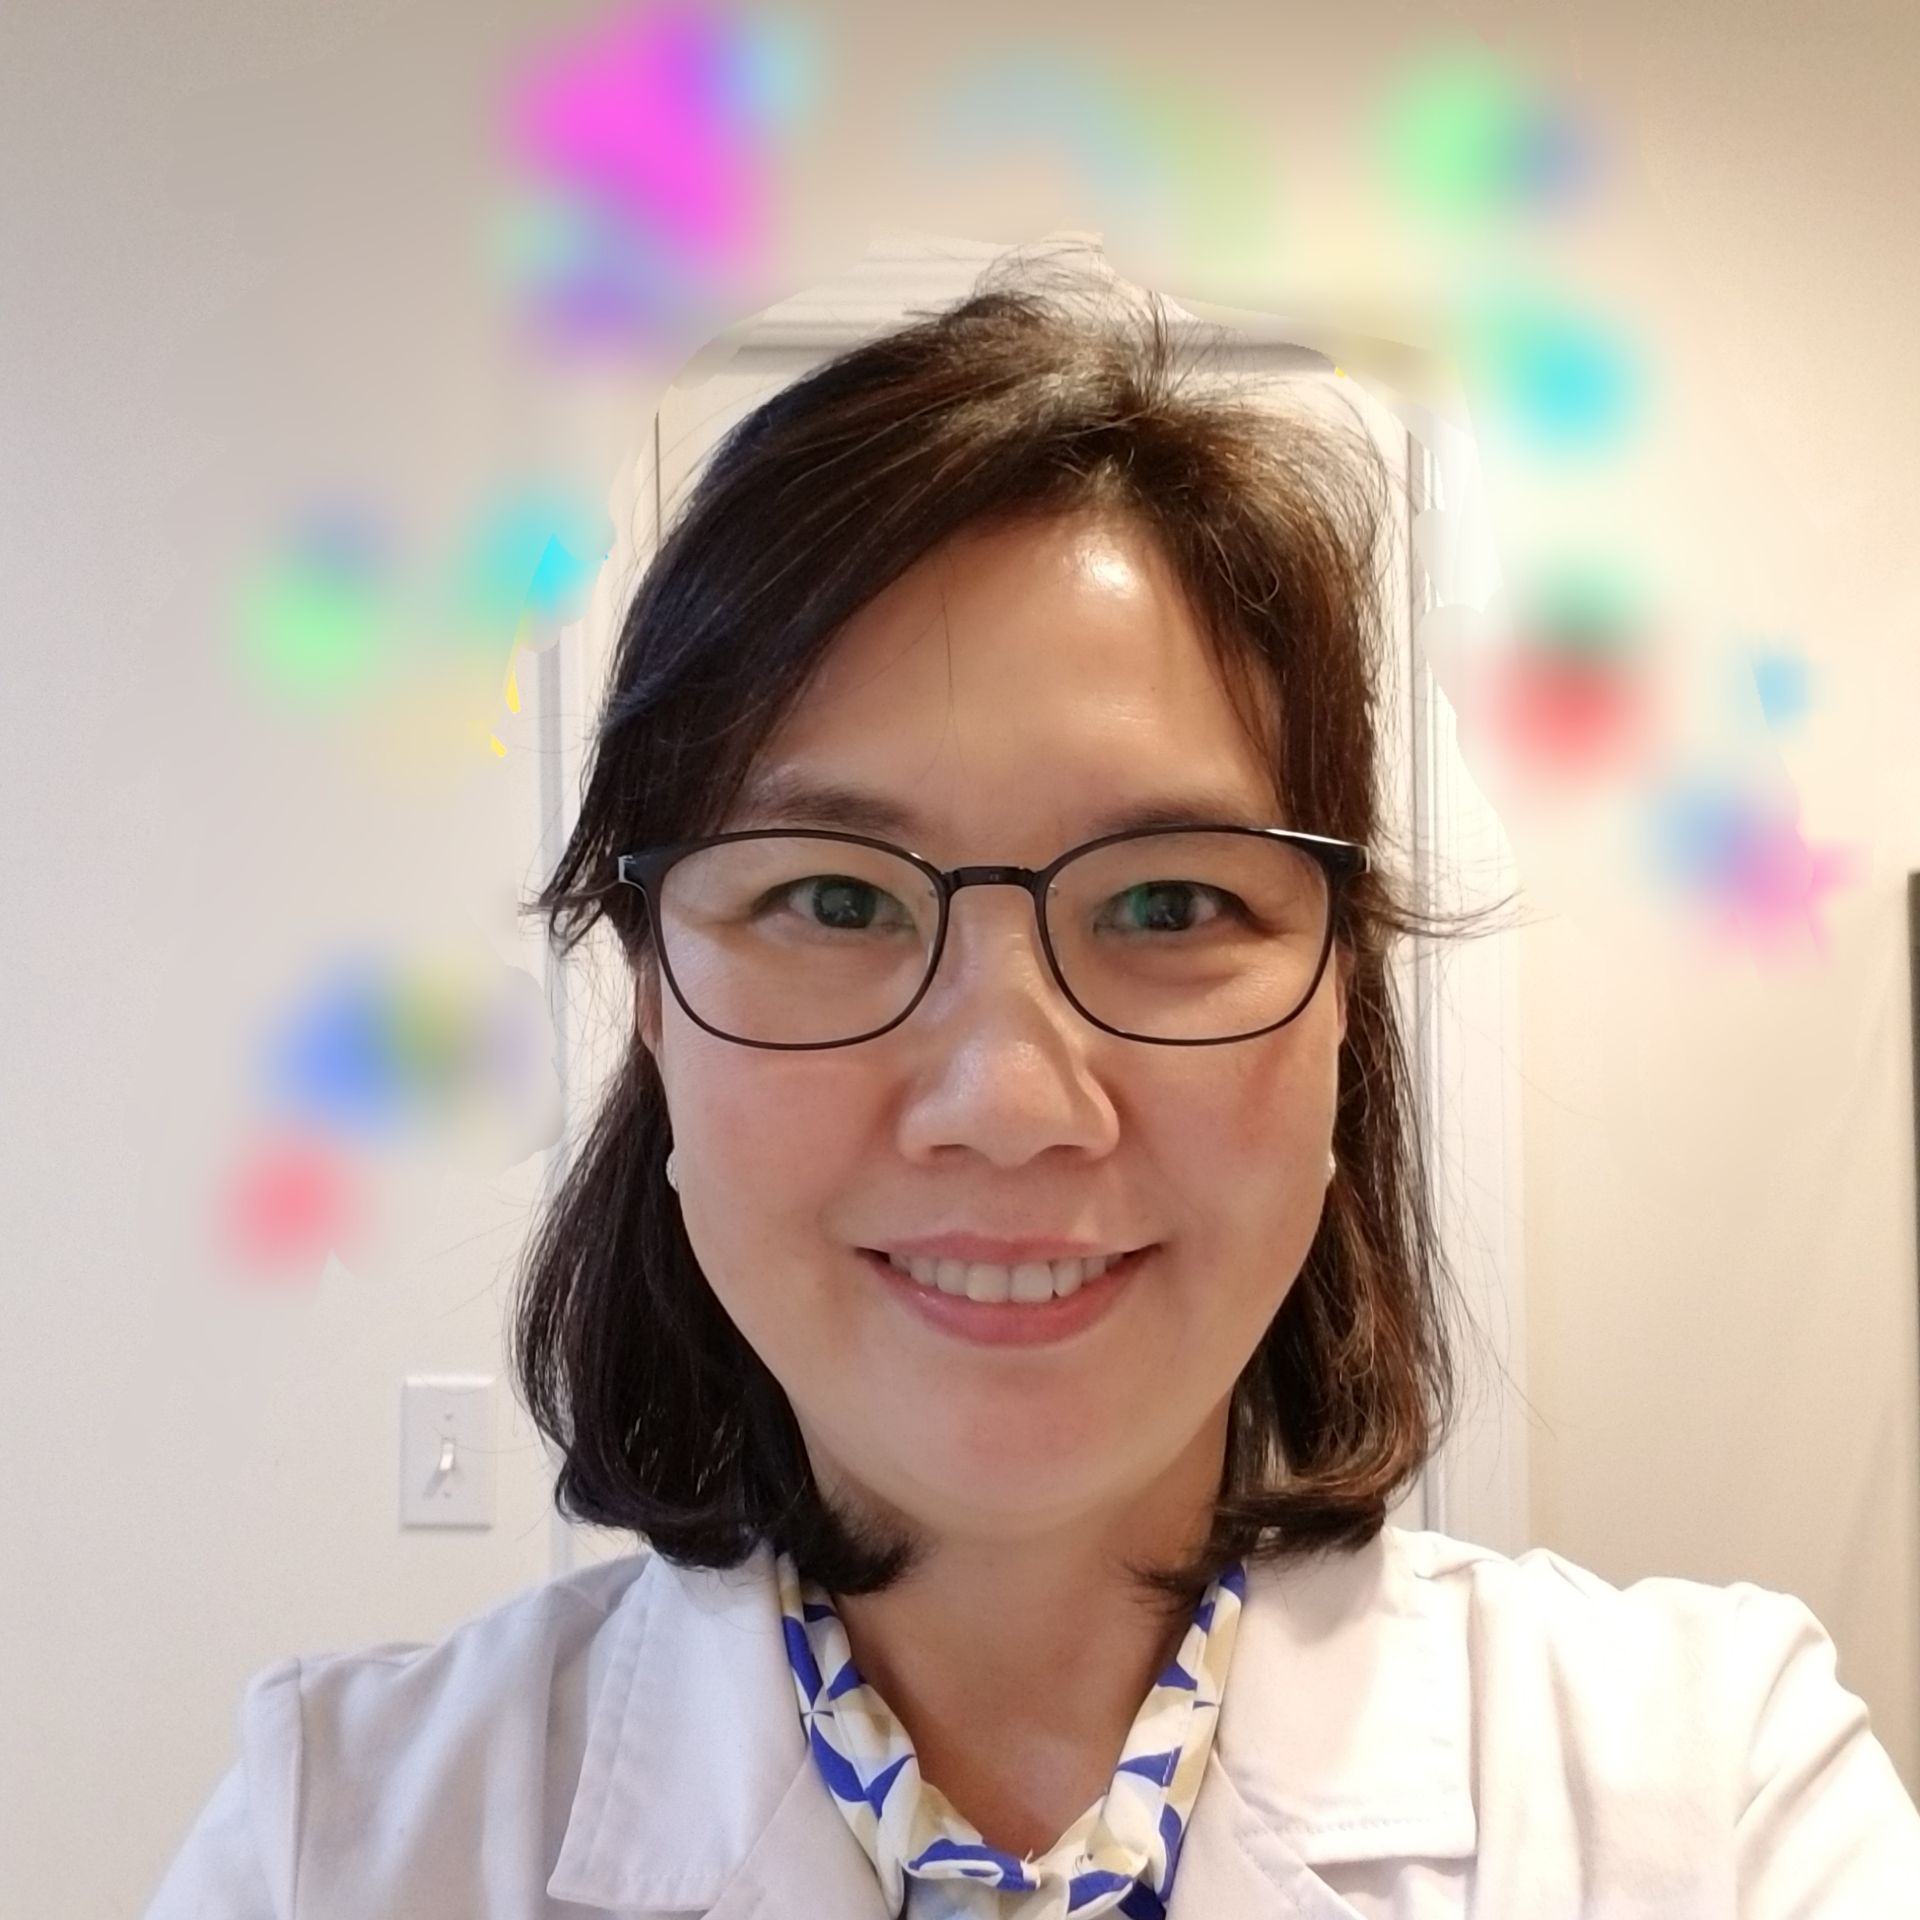 Dr. Joao Wang of Union Dental